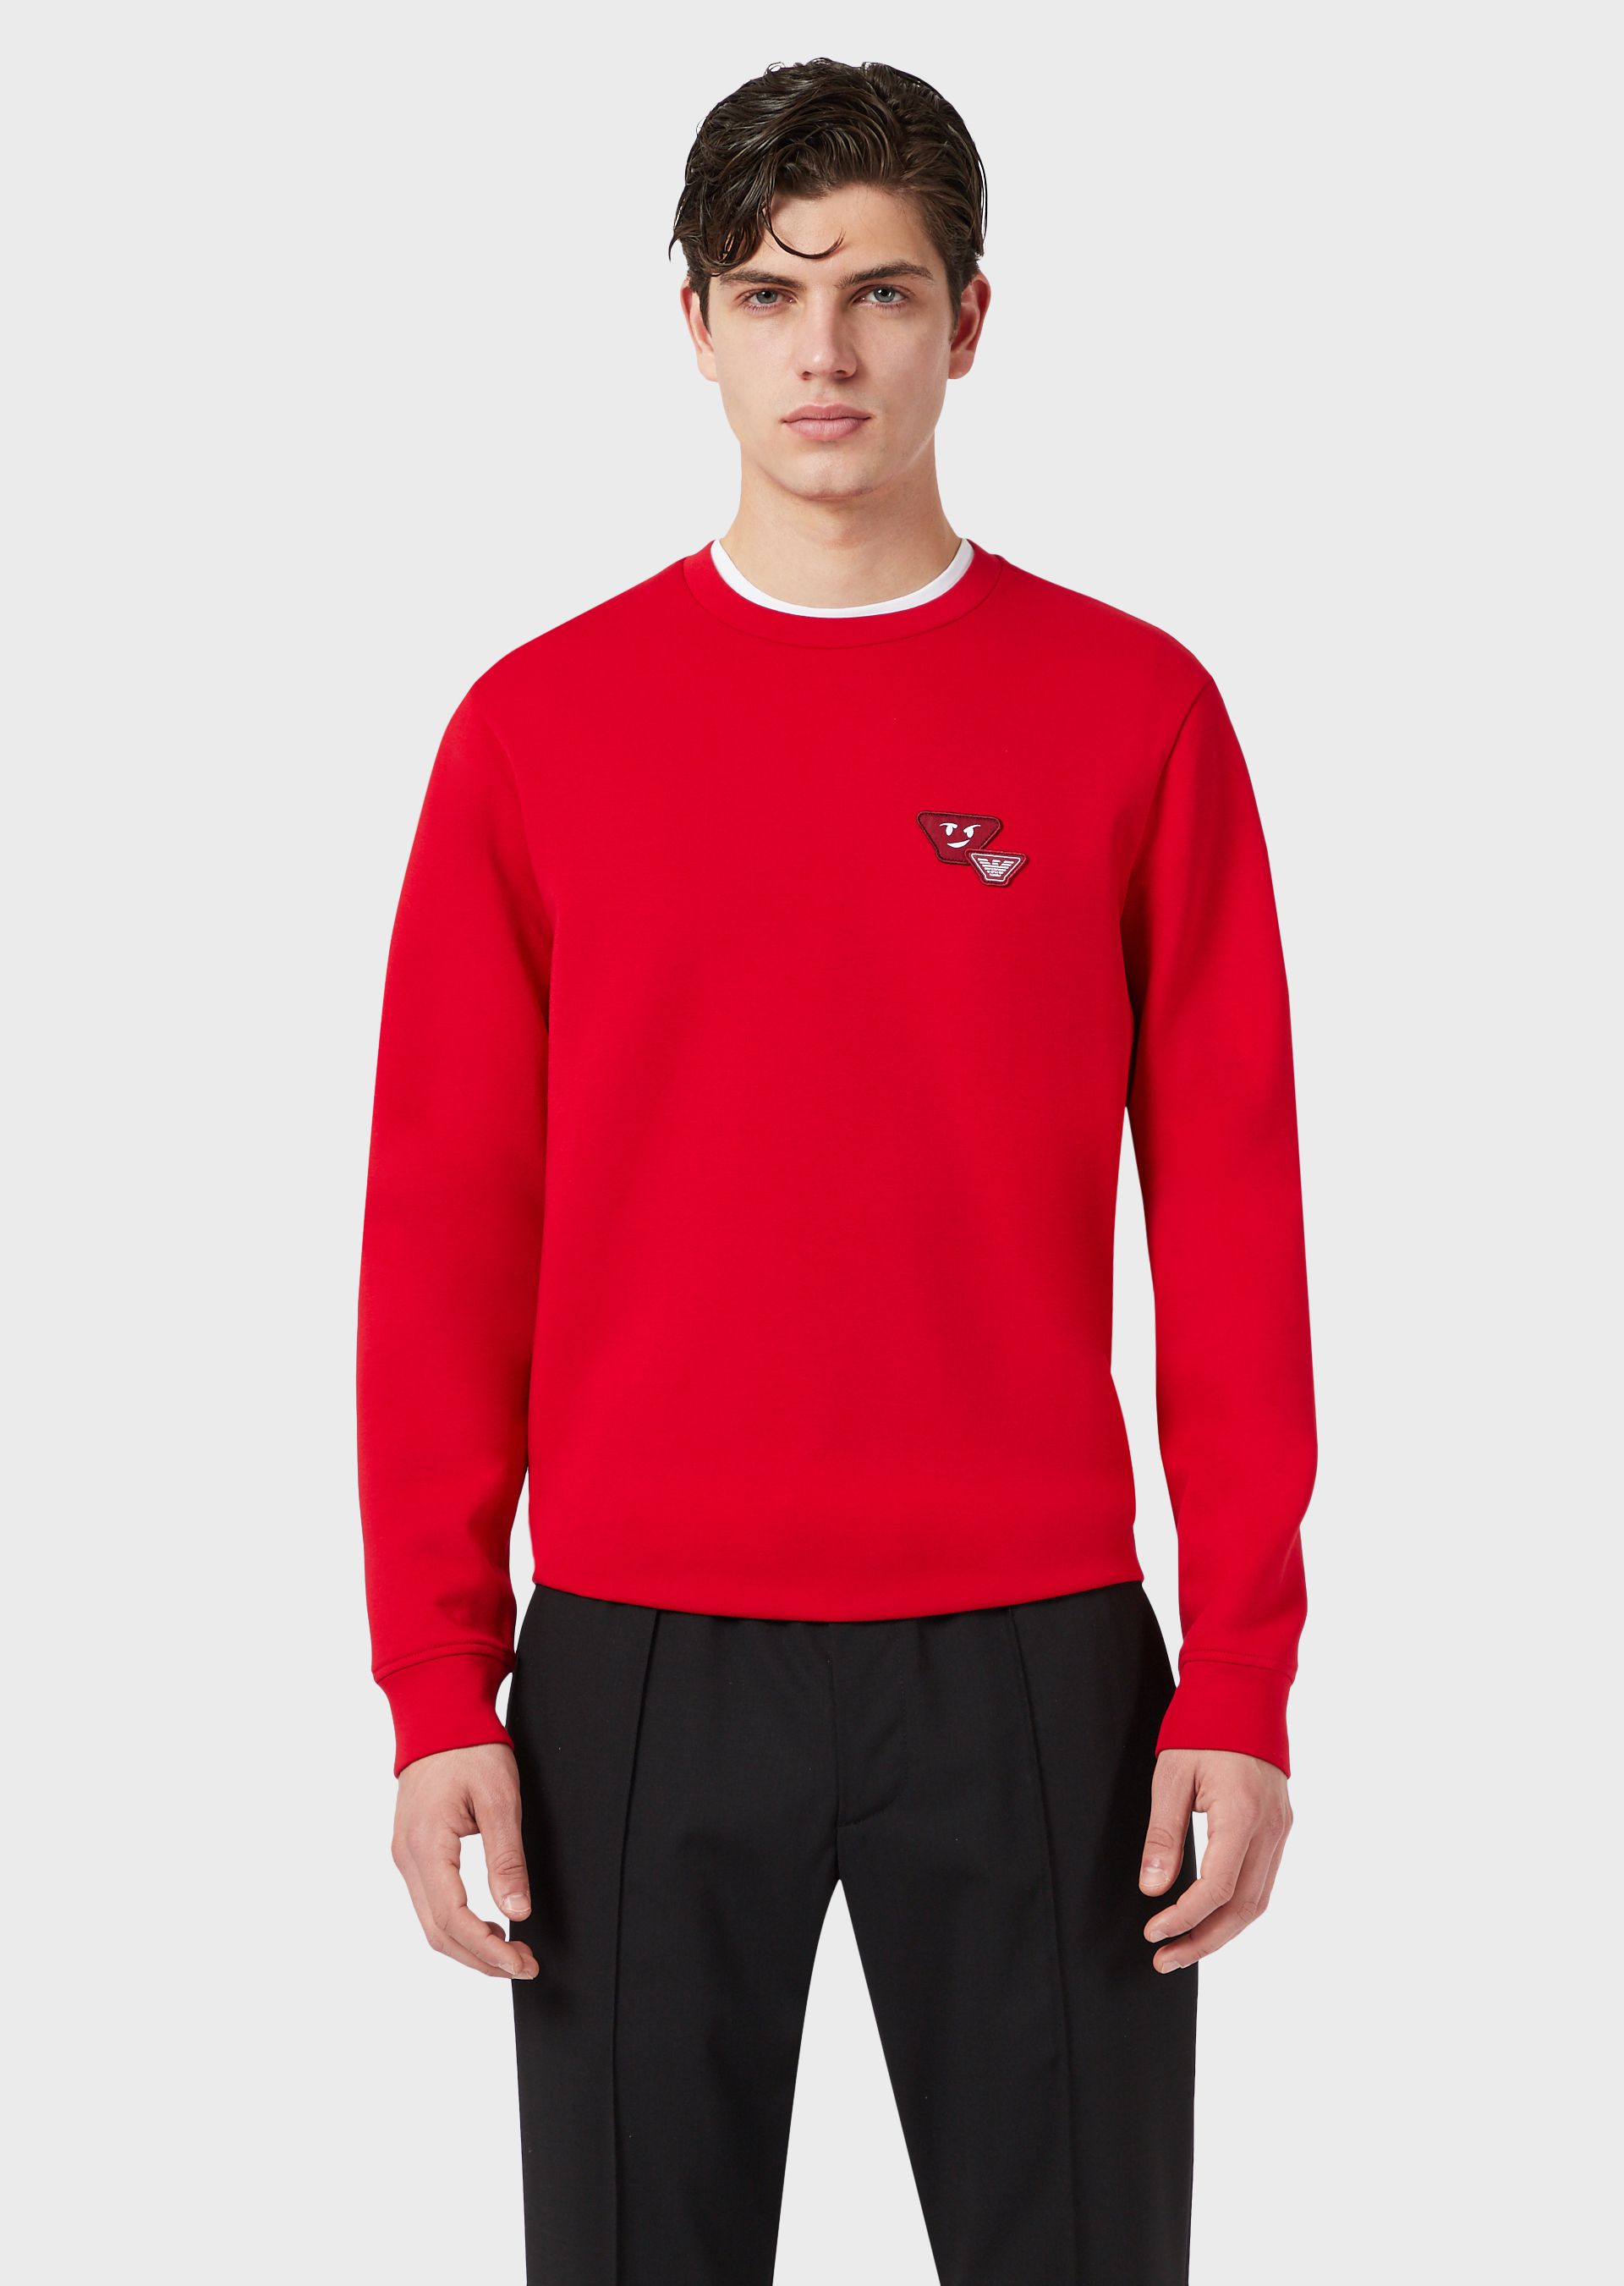 Emporio Armani Sweatshirts - Item 12424310 In Red | ModeSens